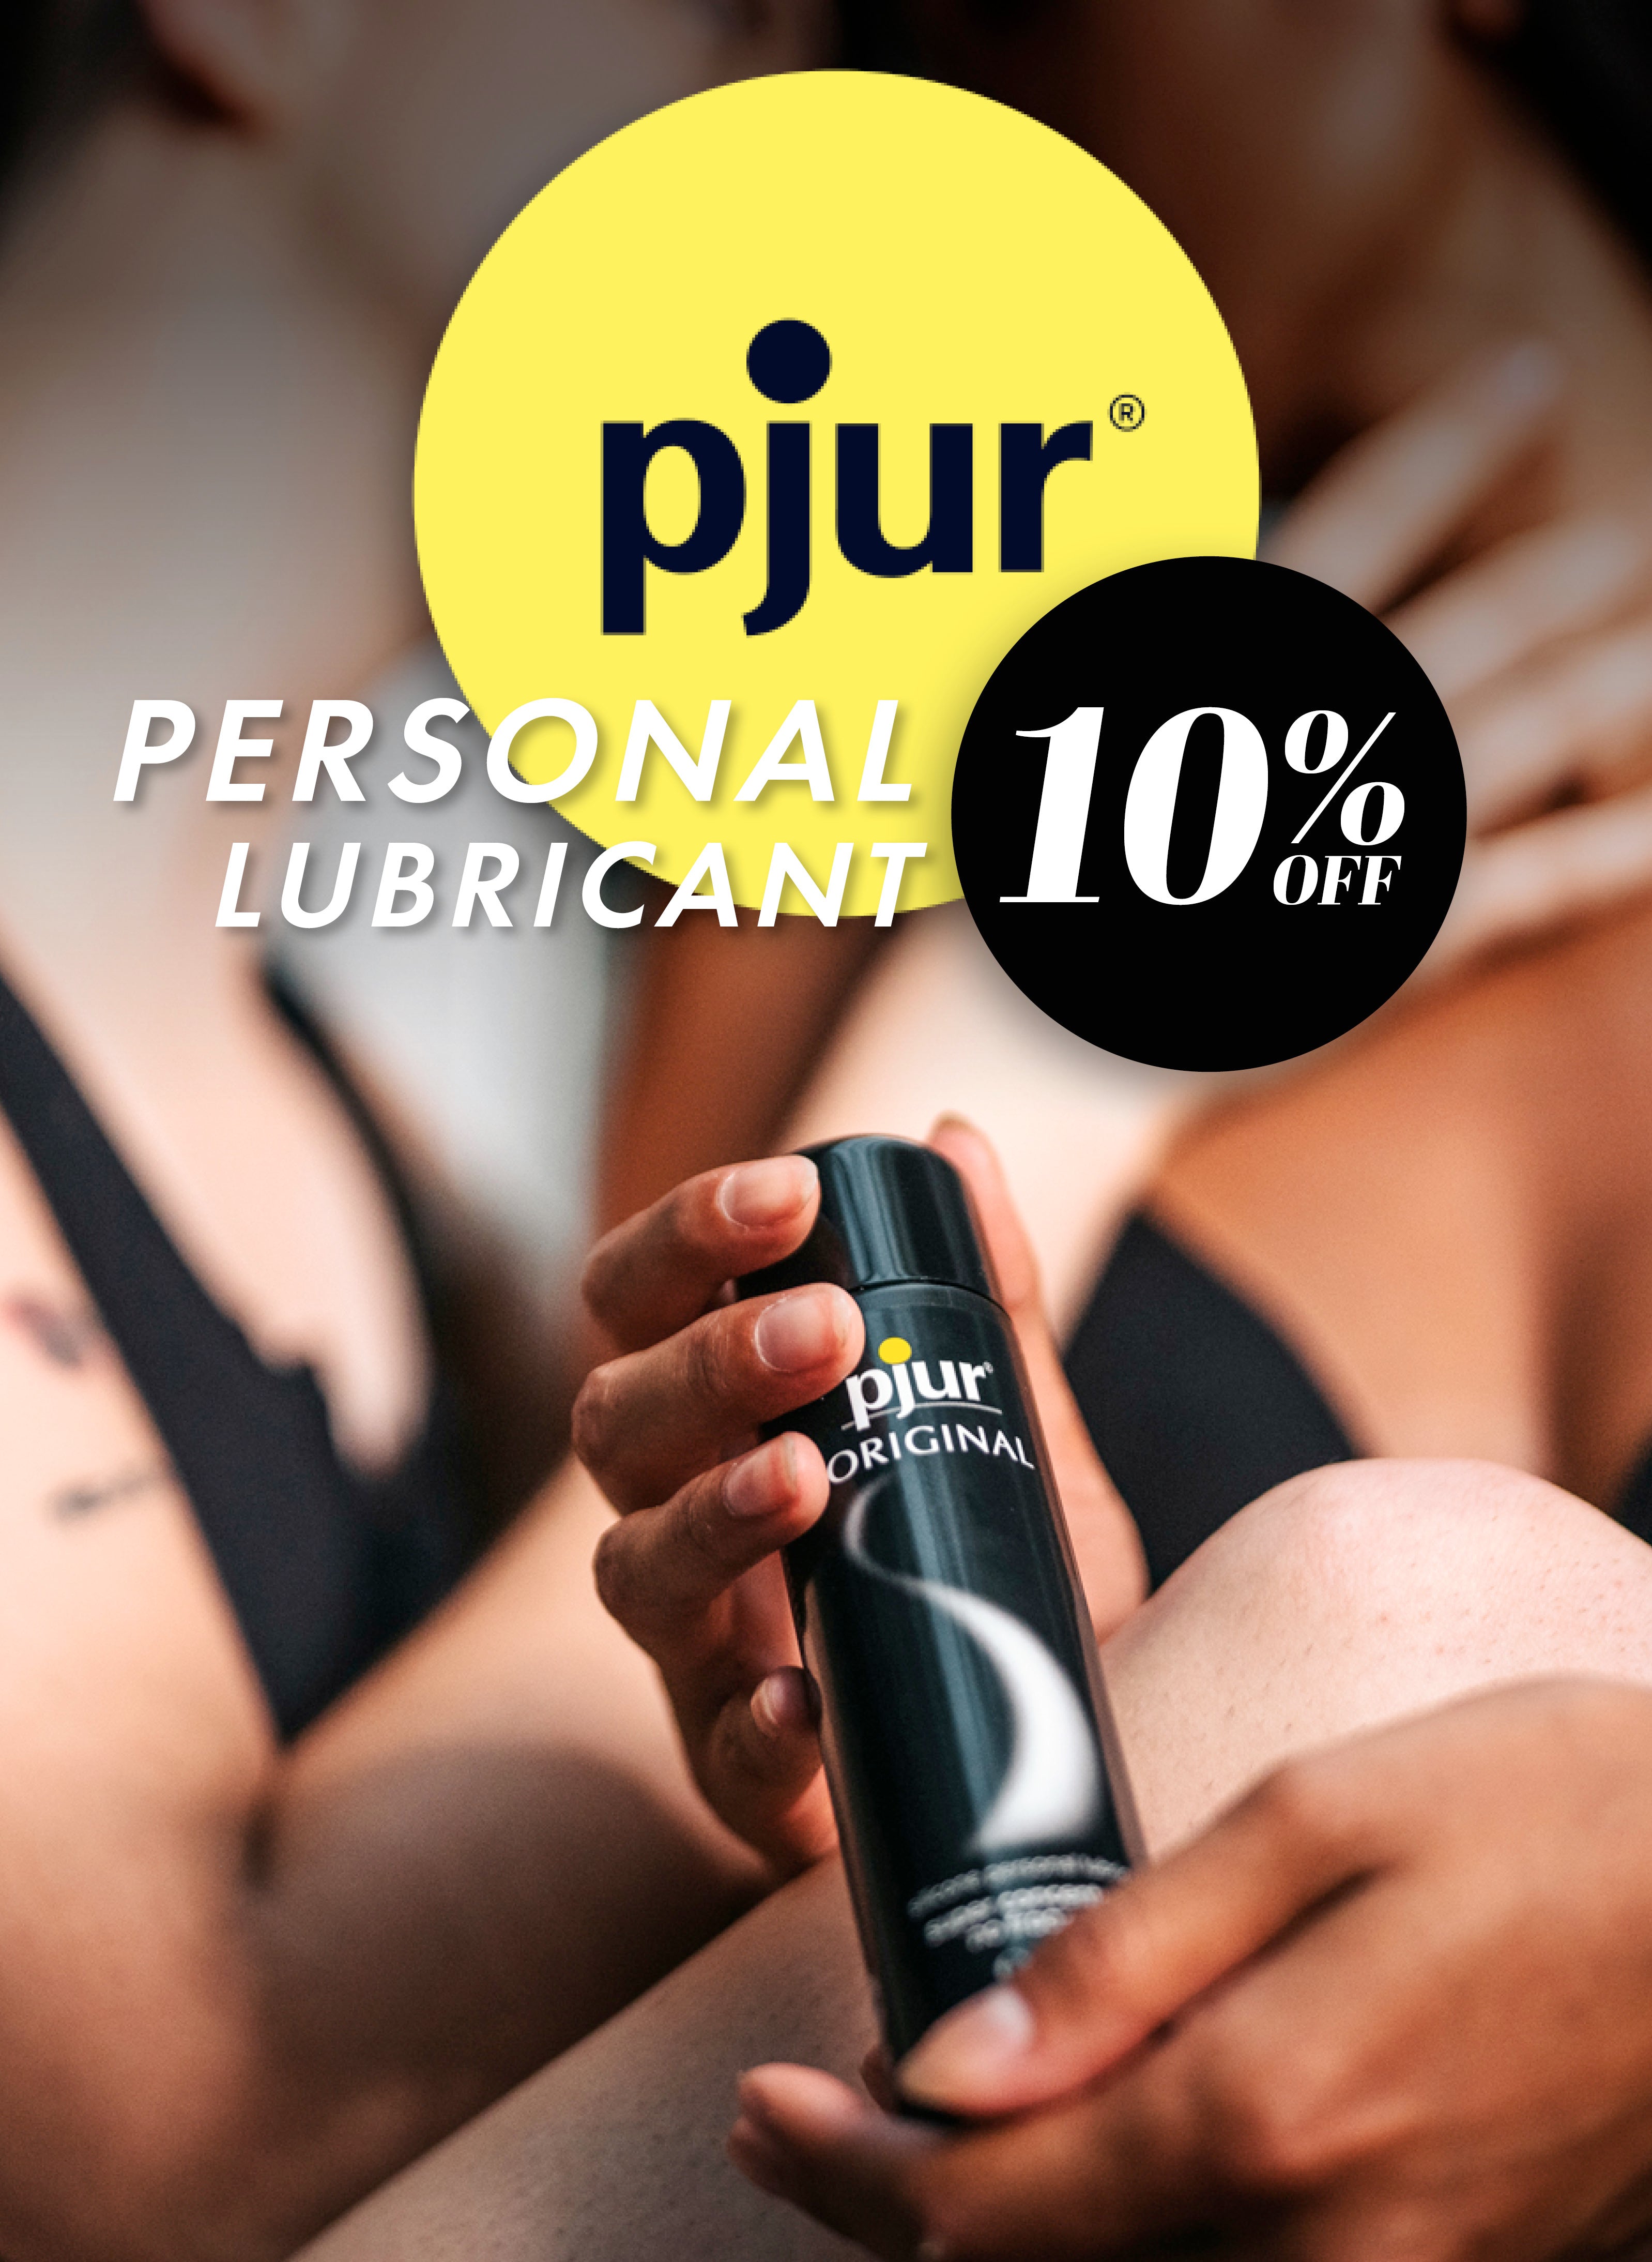 Simply Pleasure  Homepage Banner - 10 percent off PJUR Lube Image - Mobile Image